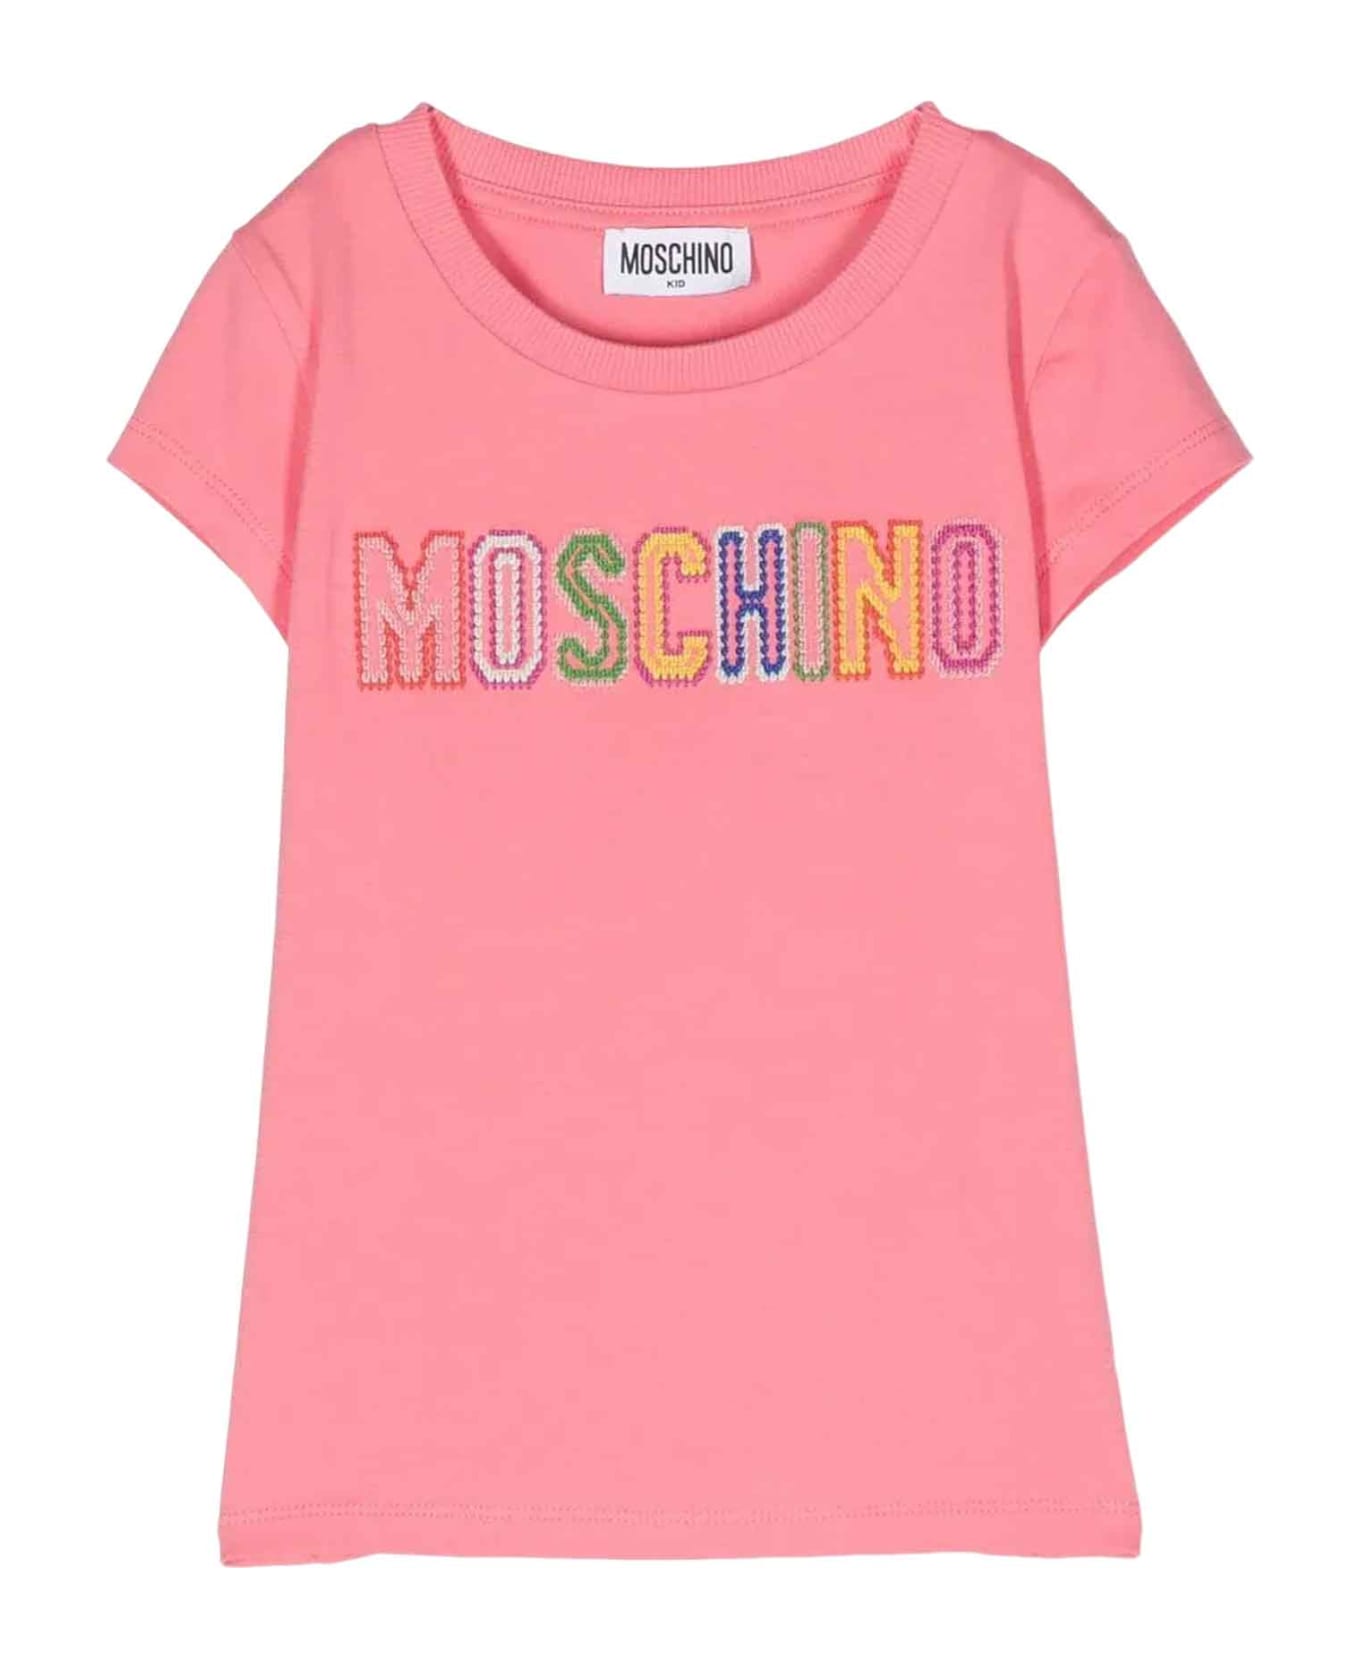 Moschino Pink T-shirt Girl - Rosa